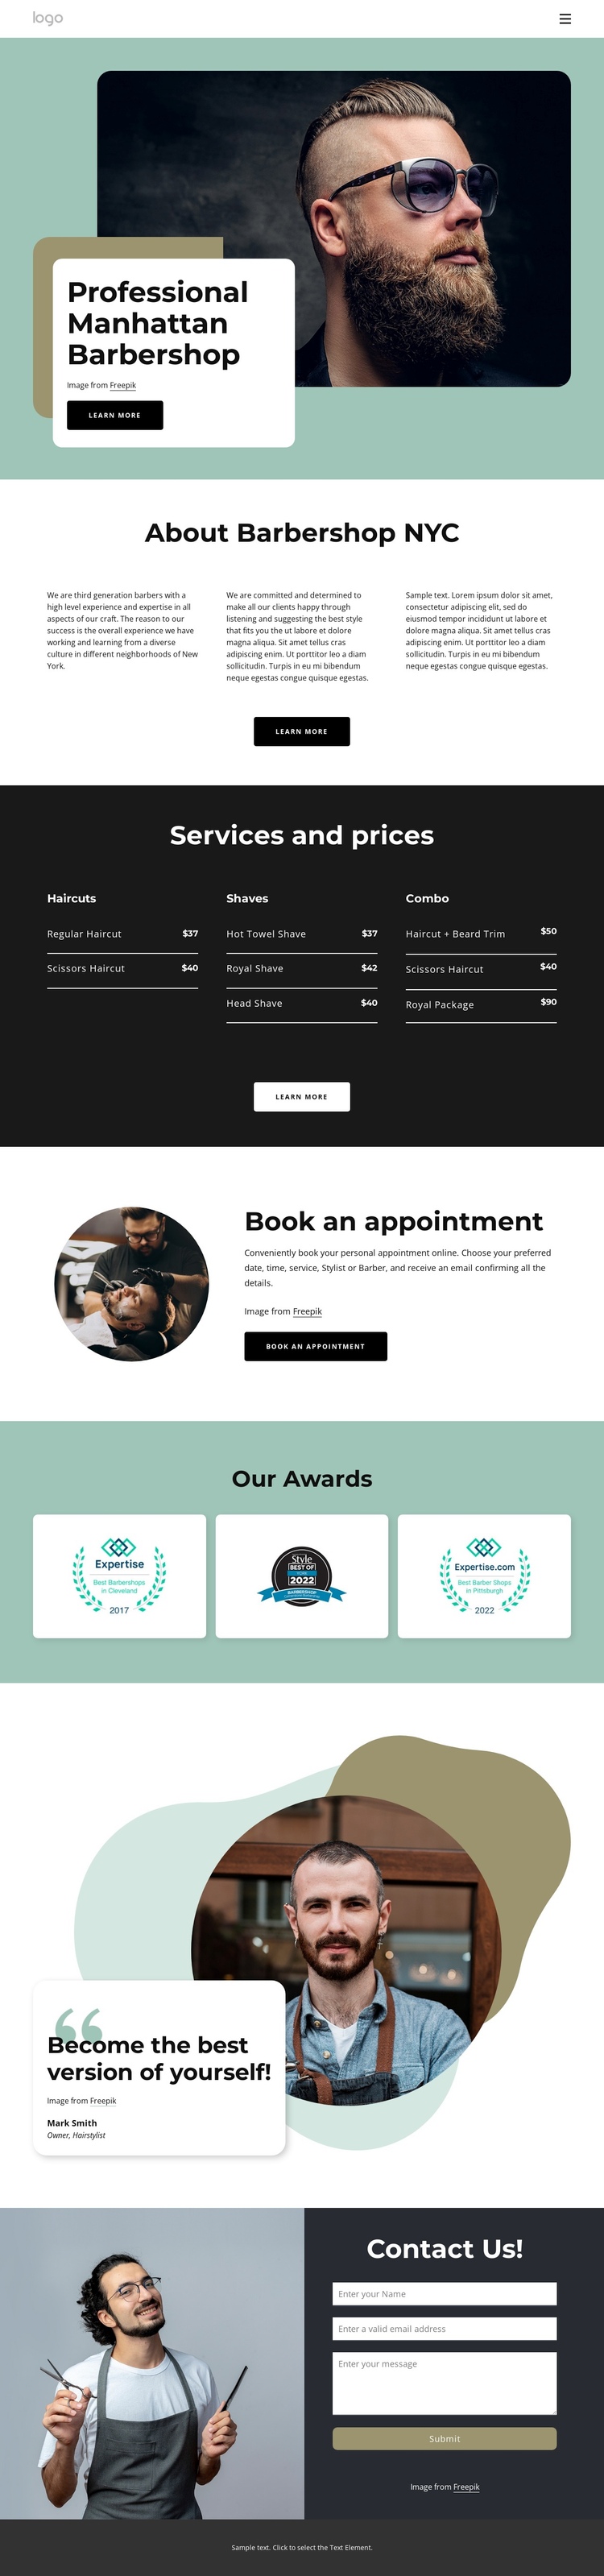 About Manhattan barbershop Website Builder Software